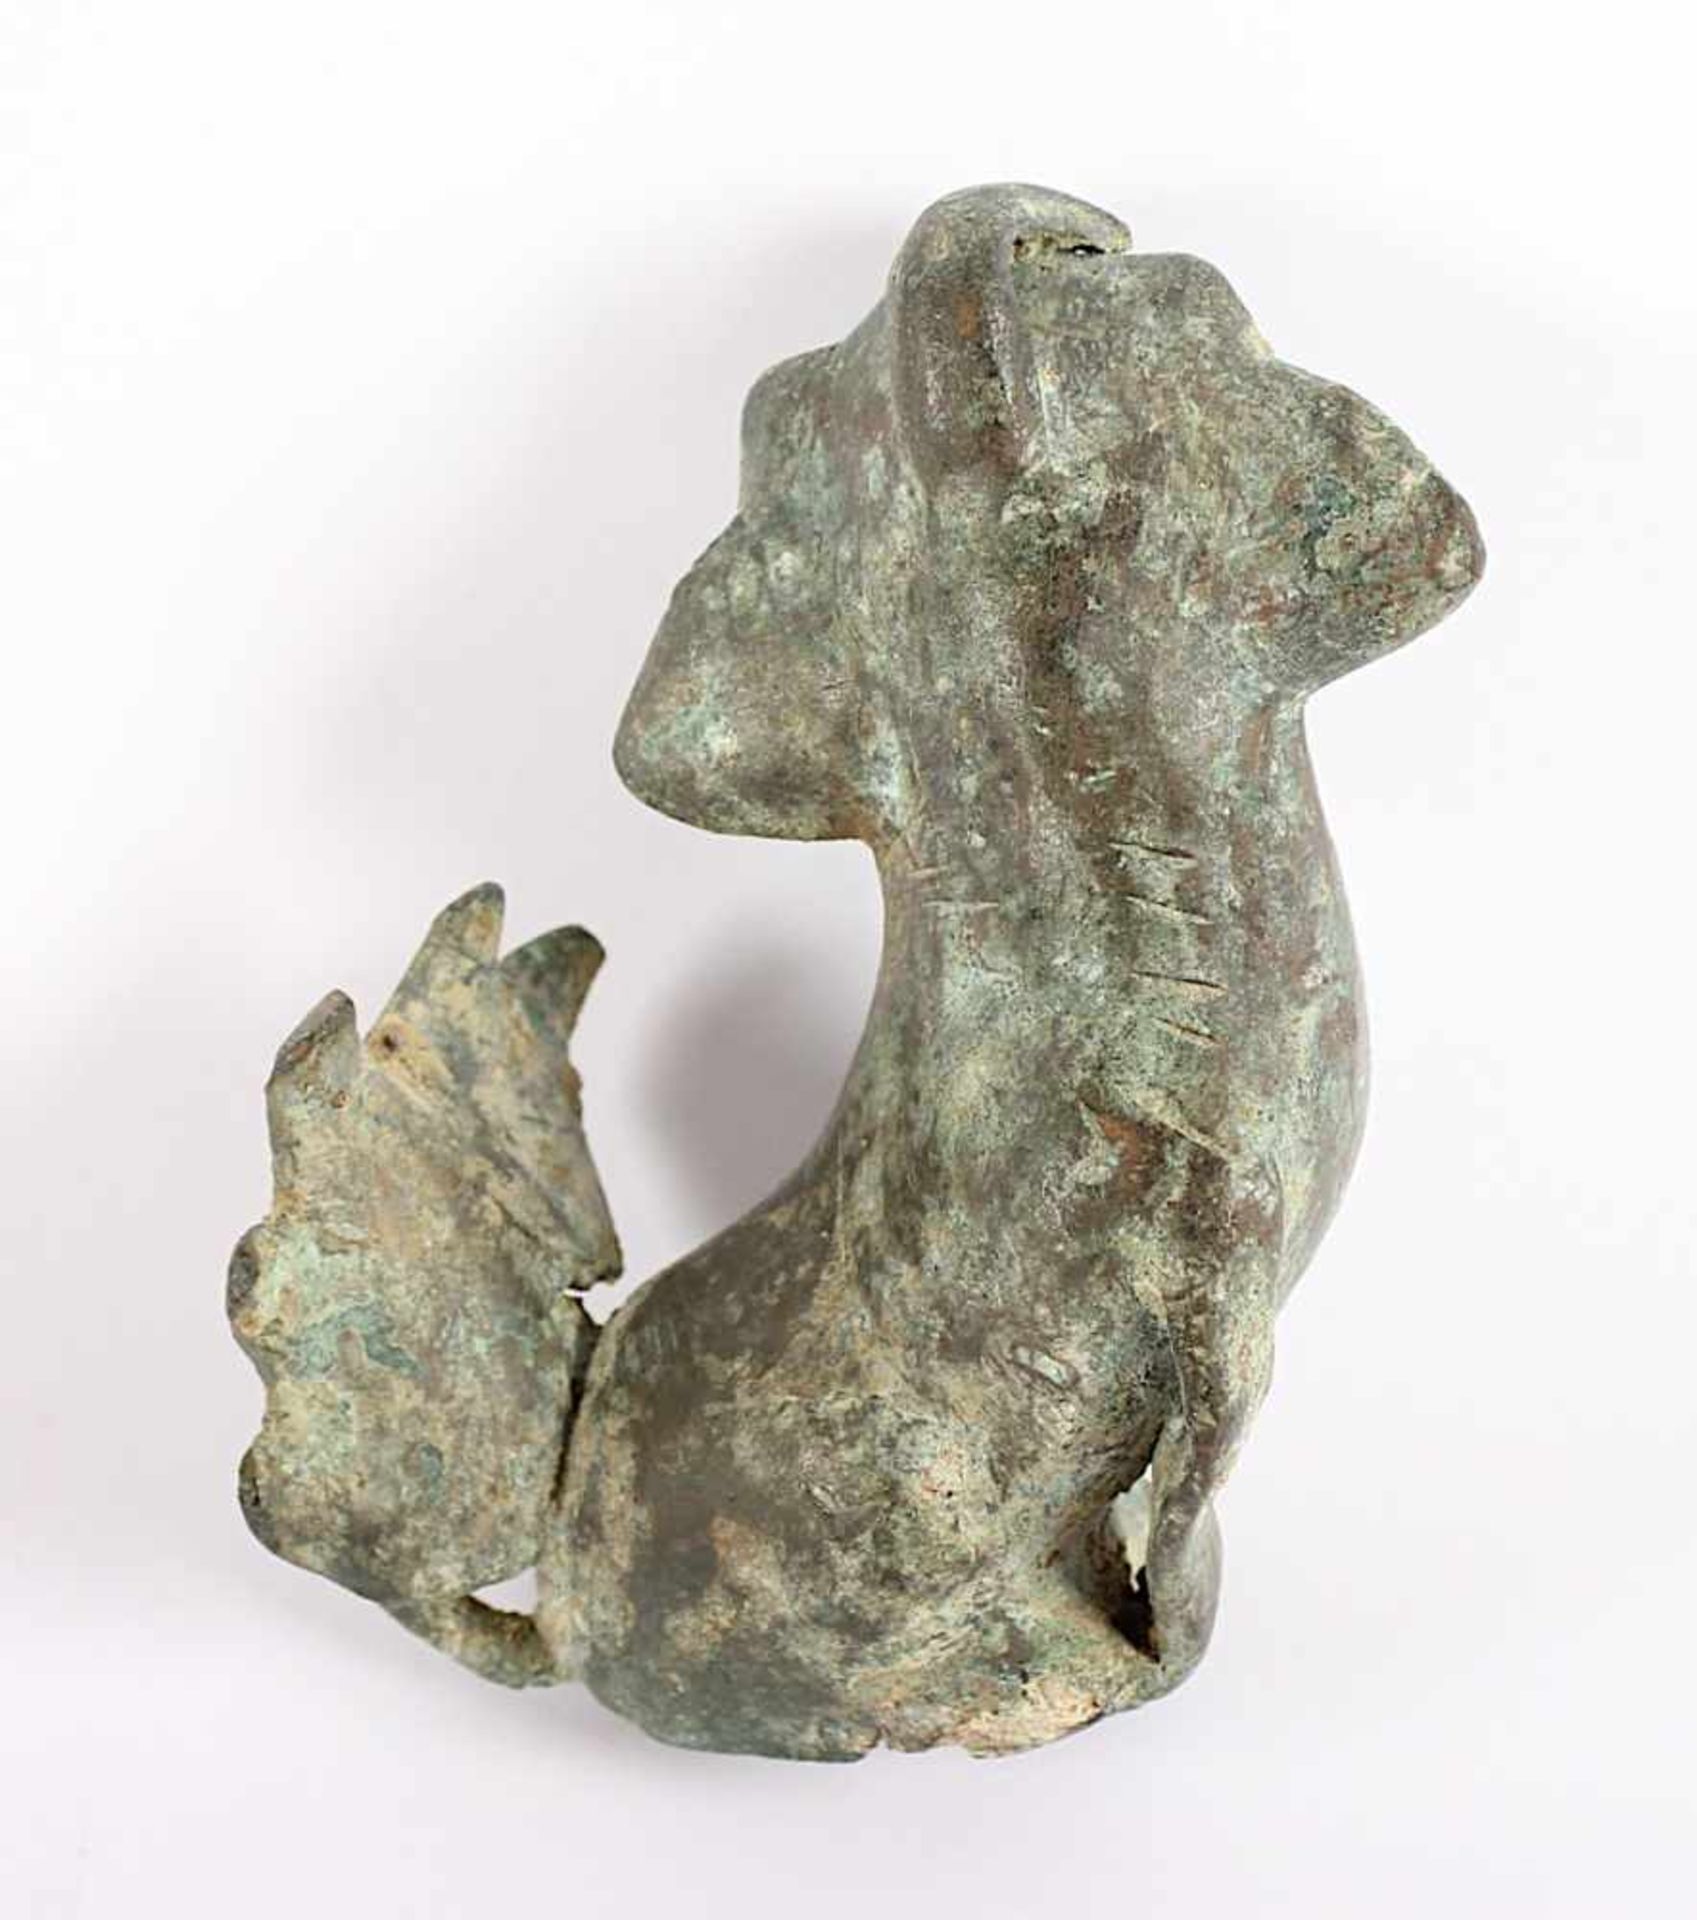 FO-HUND, Bronze, grün patiniert, H 11,5, besch., CHINA- - -22.00 % buyer's premium on the hammer - Image 2 of 2